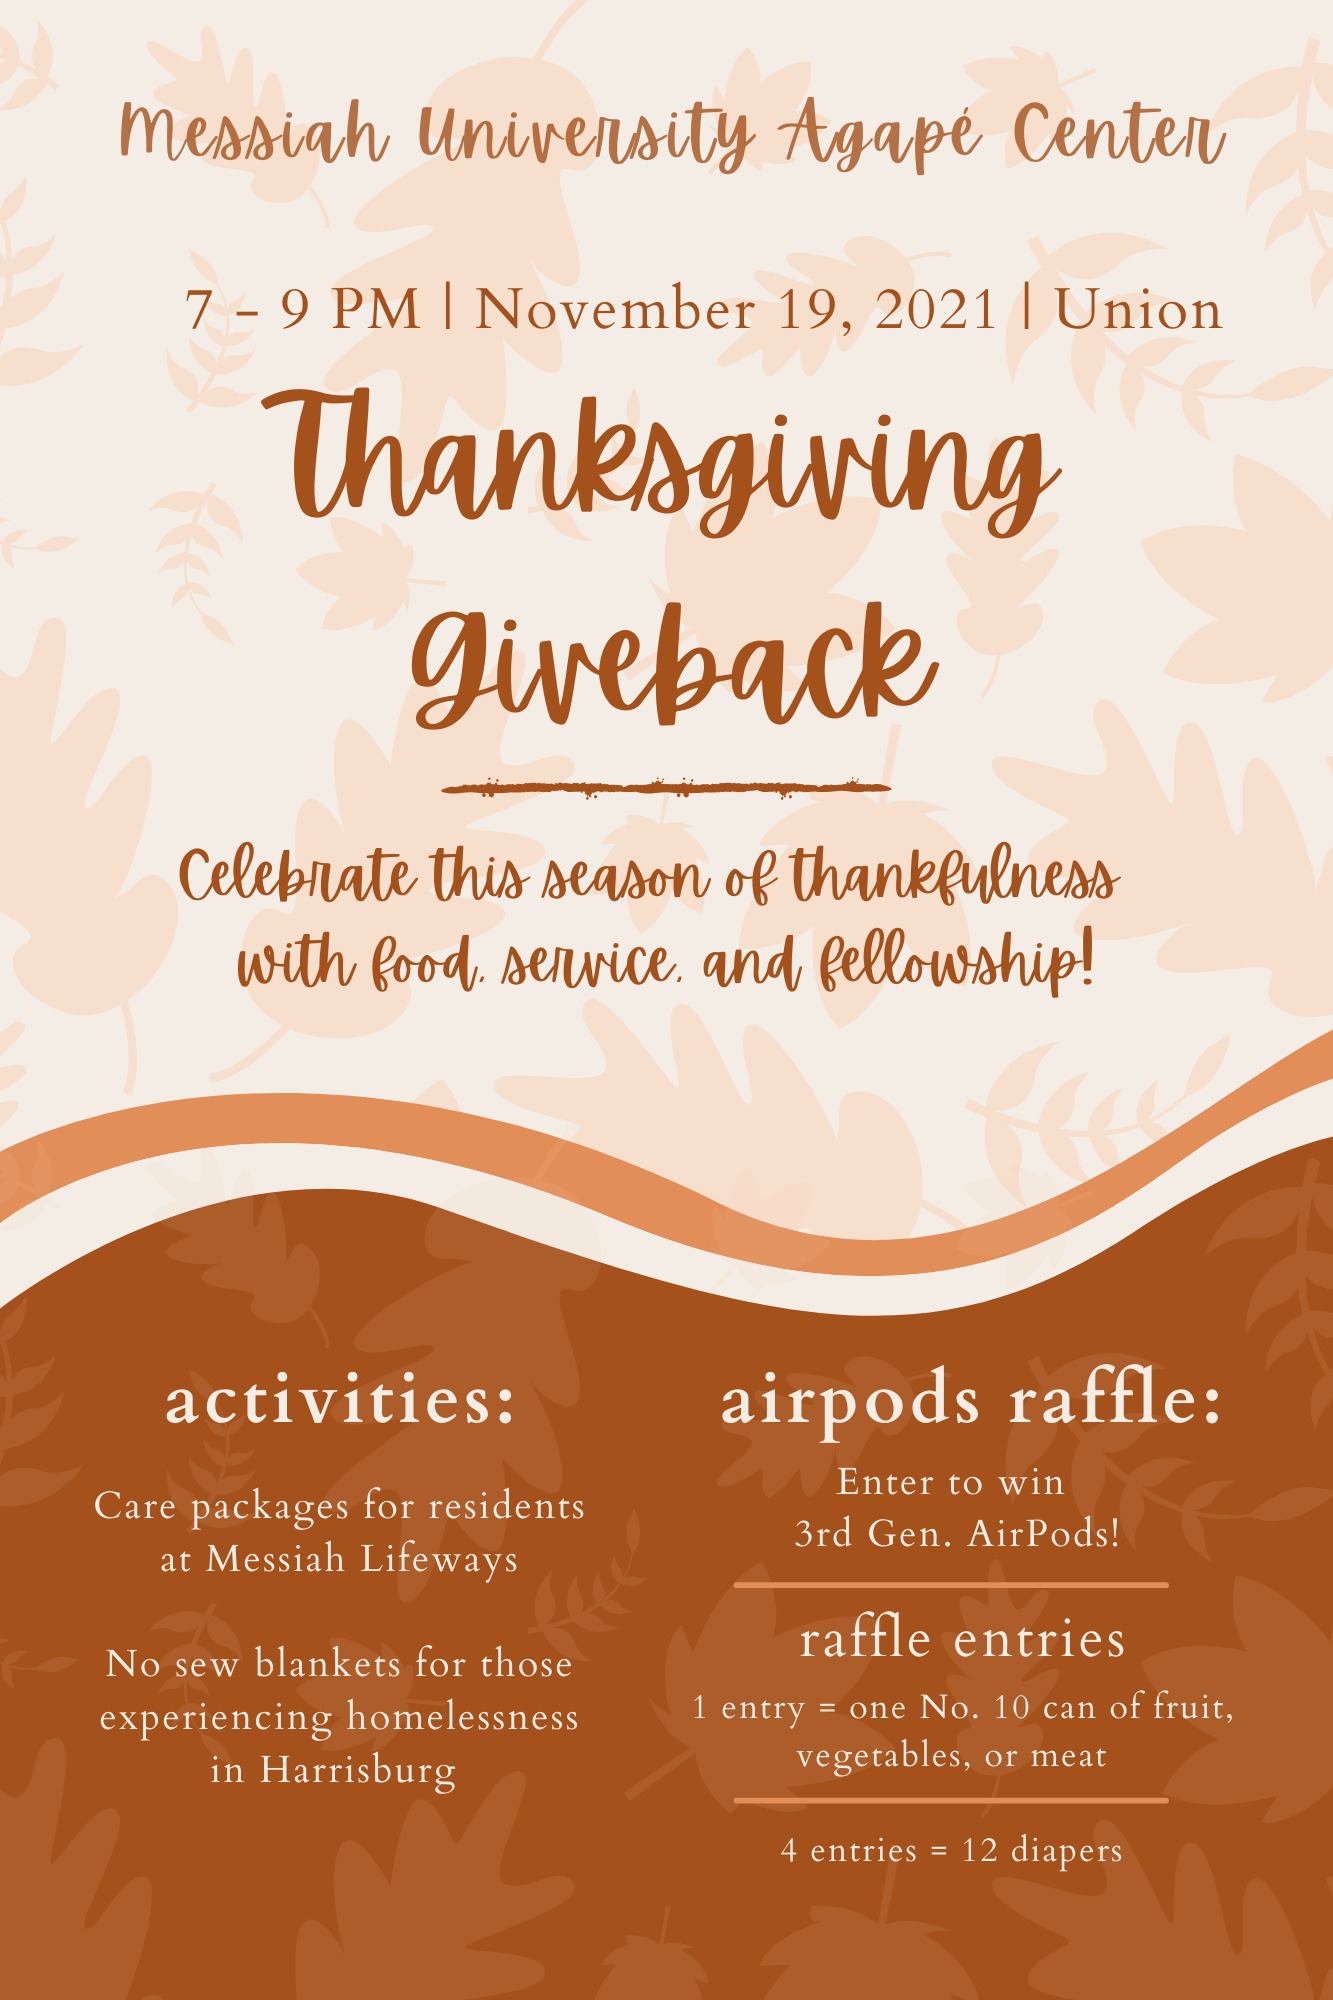 Thanksgiving giveback